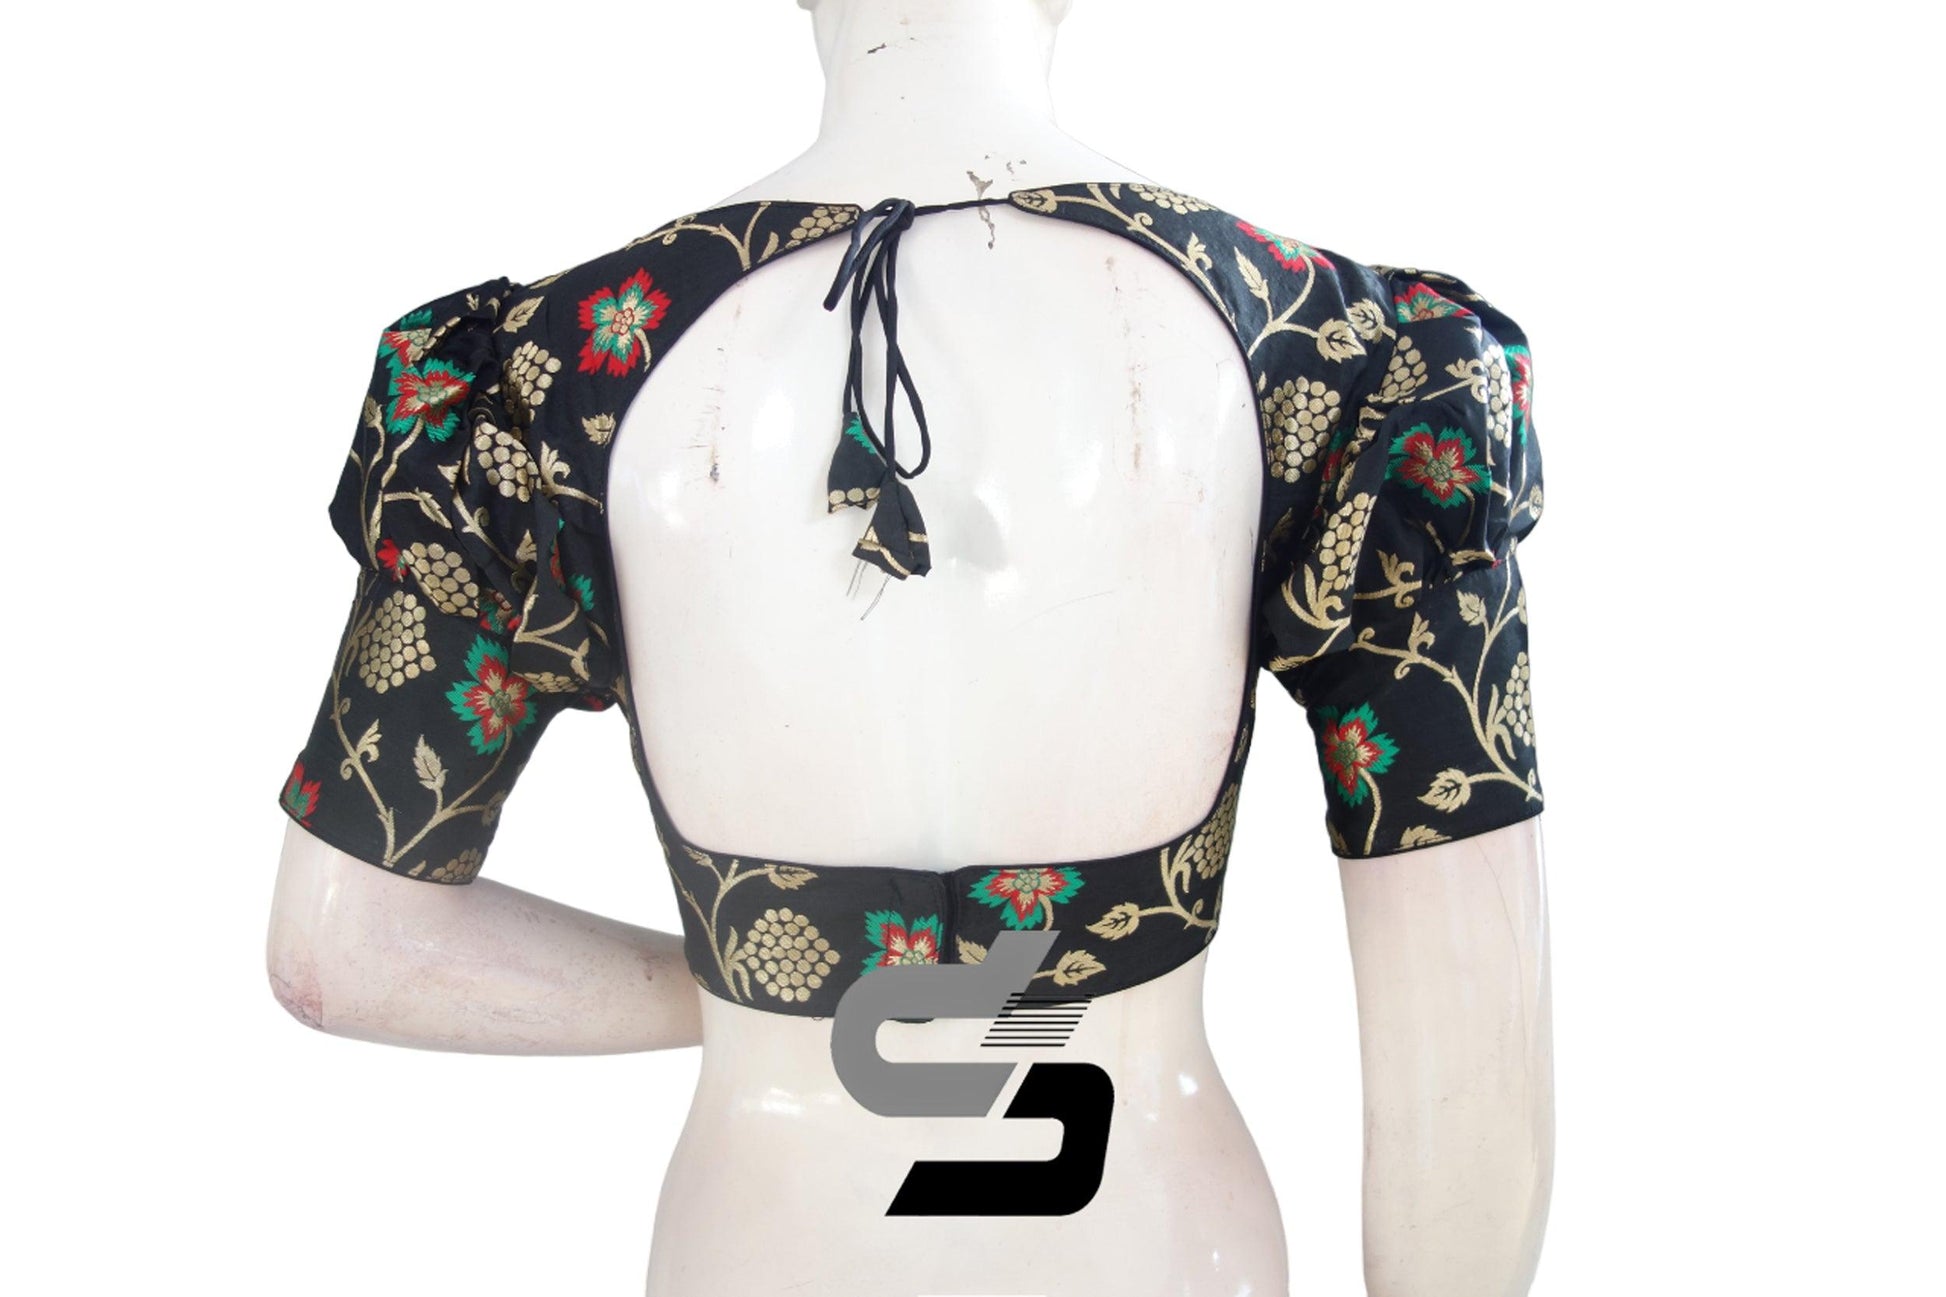 Black Color Banarasi Brocade silk Readymade saree blouse with Puff Sleeves, Indian Readymade blouse, Crop top, - D3blouses